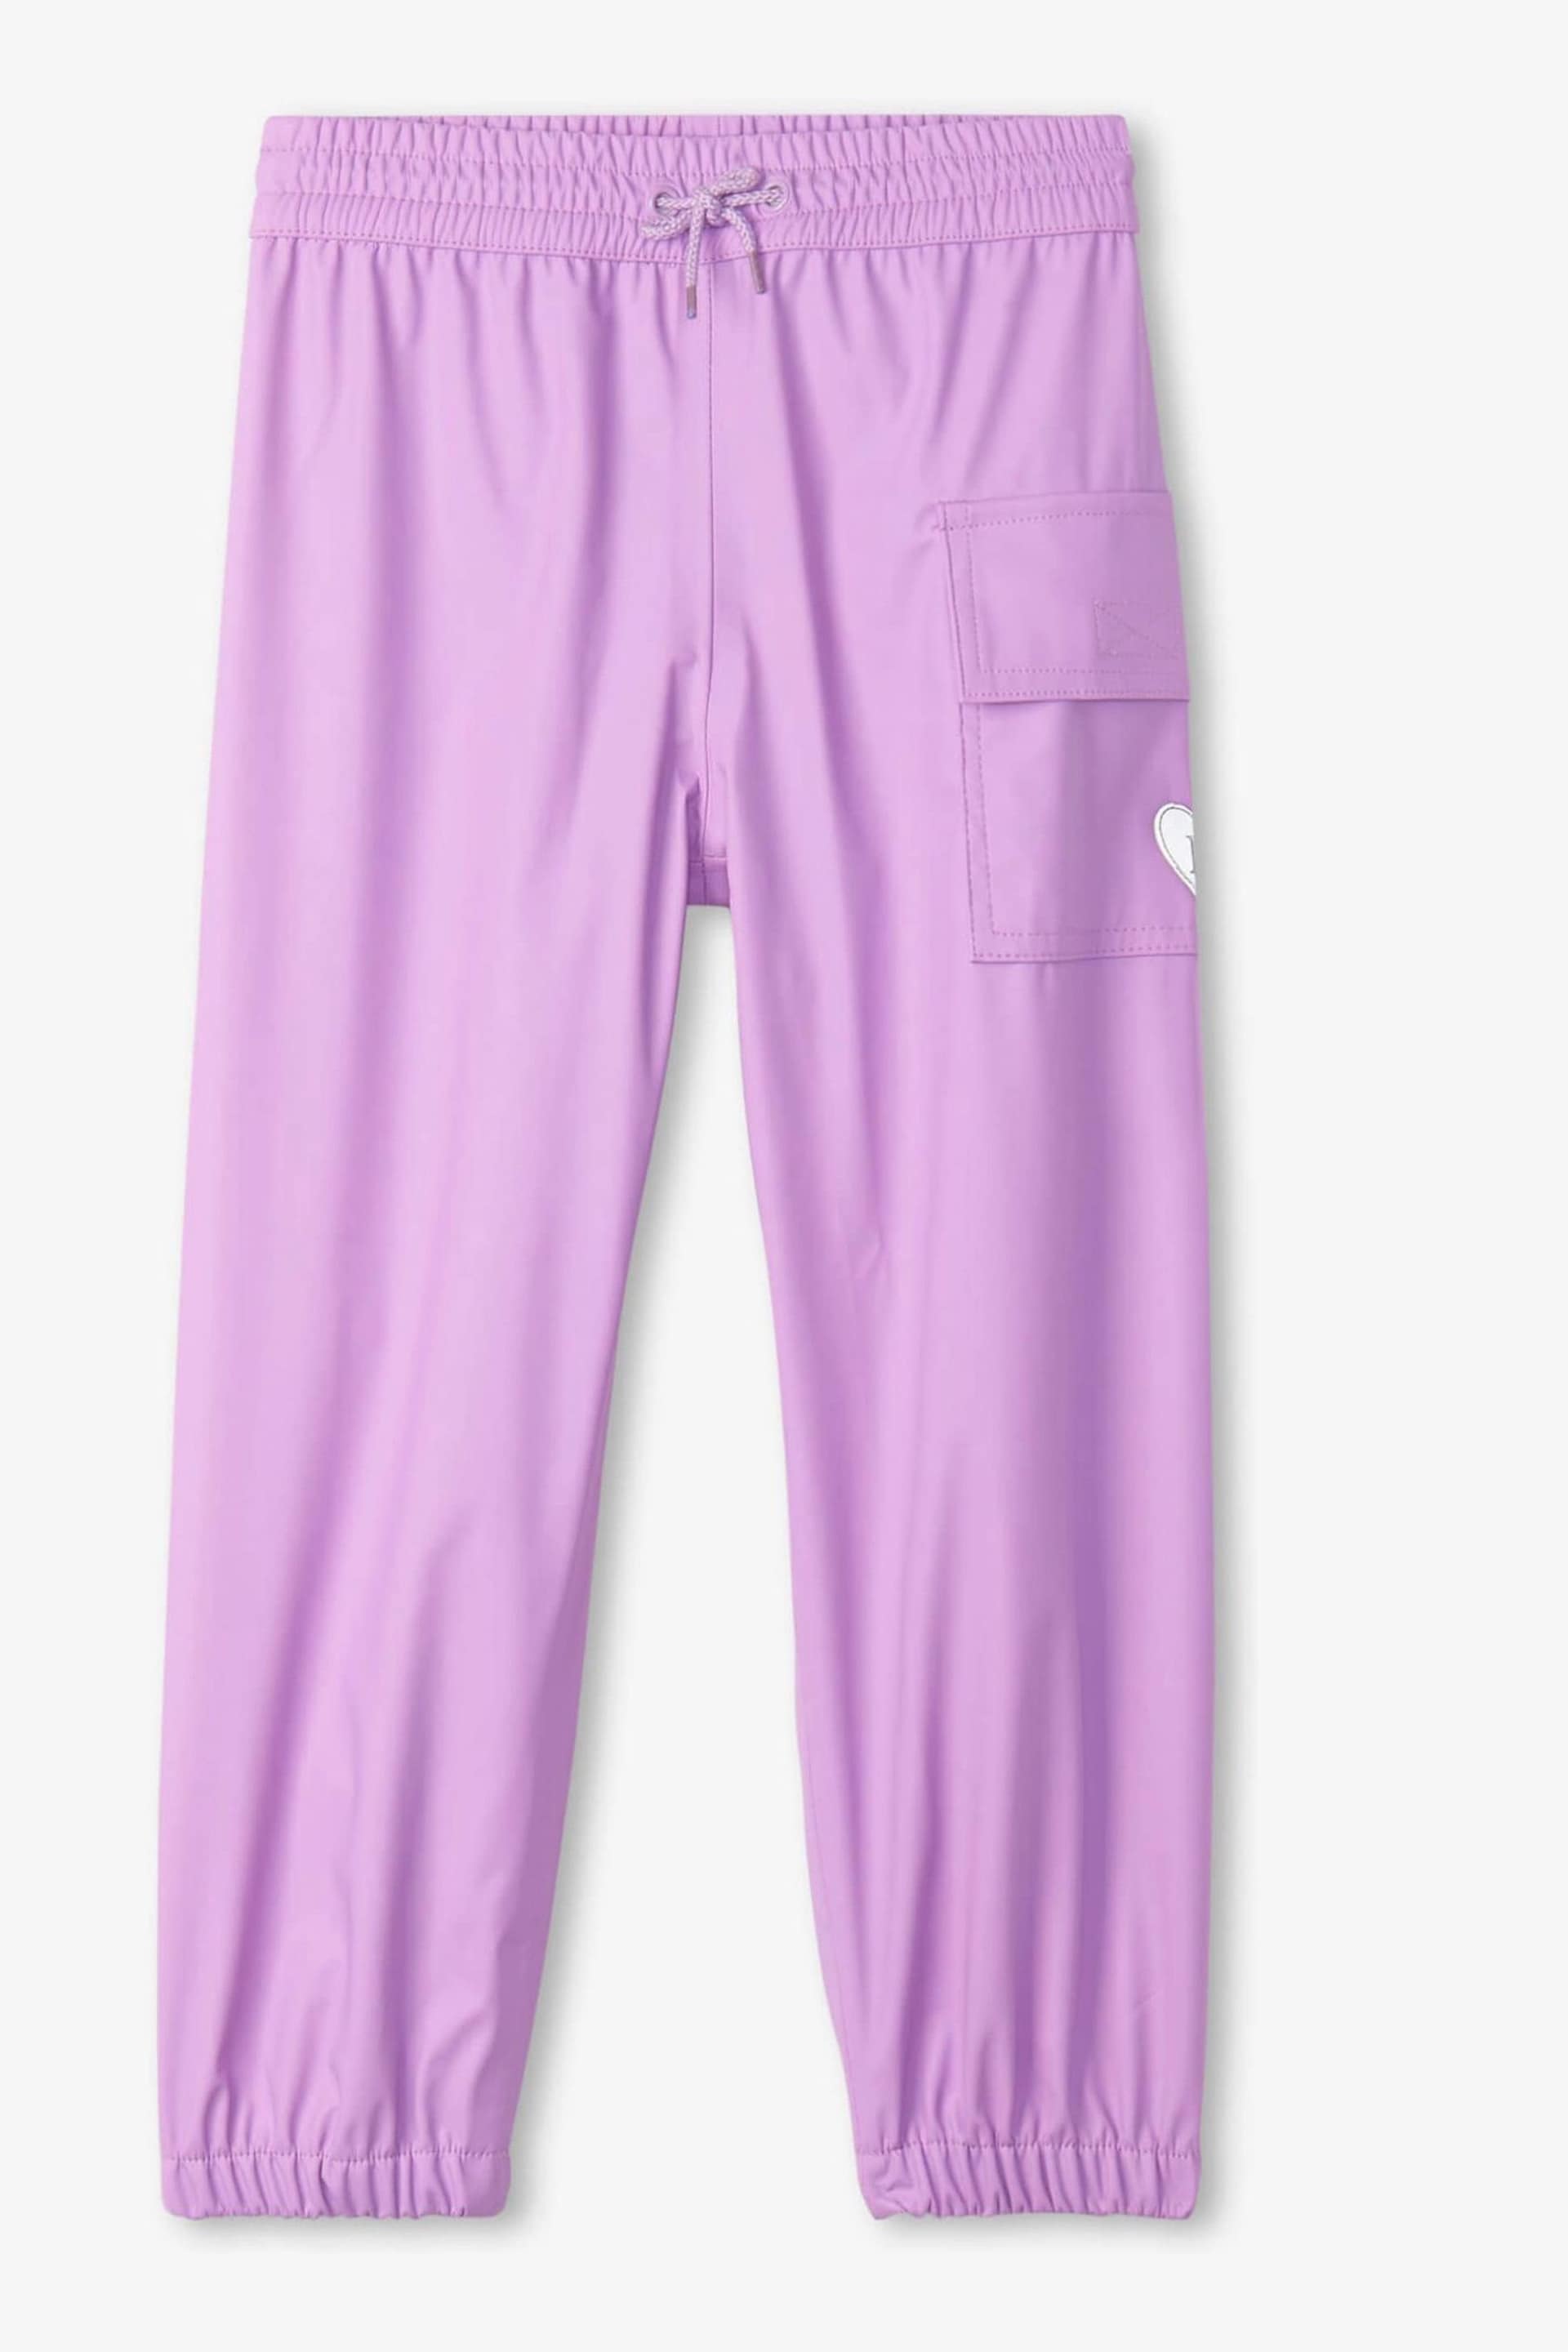 Hatley Purple Splash Trousers - Image 1 of 6